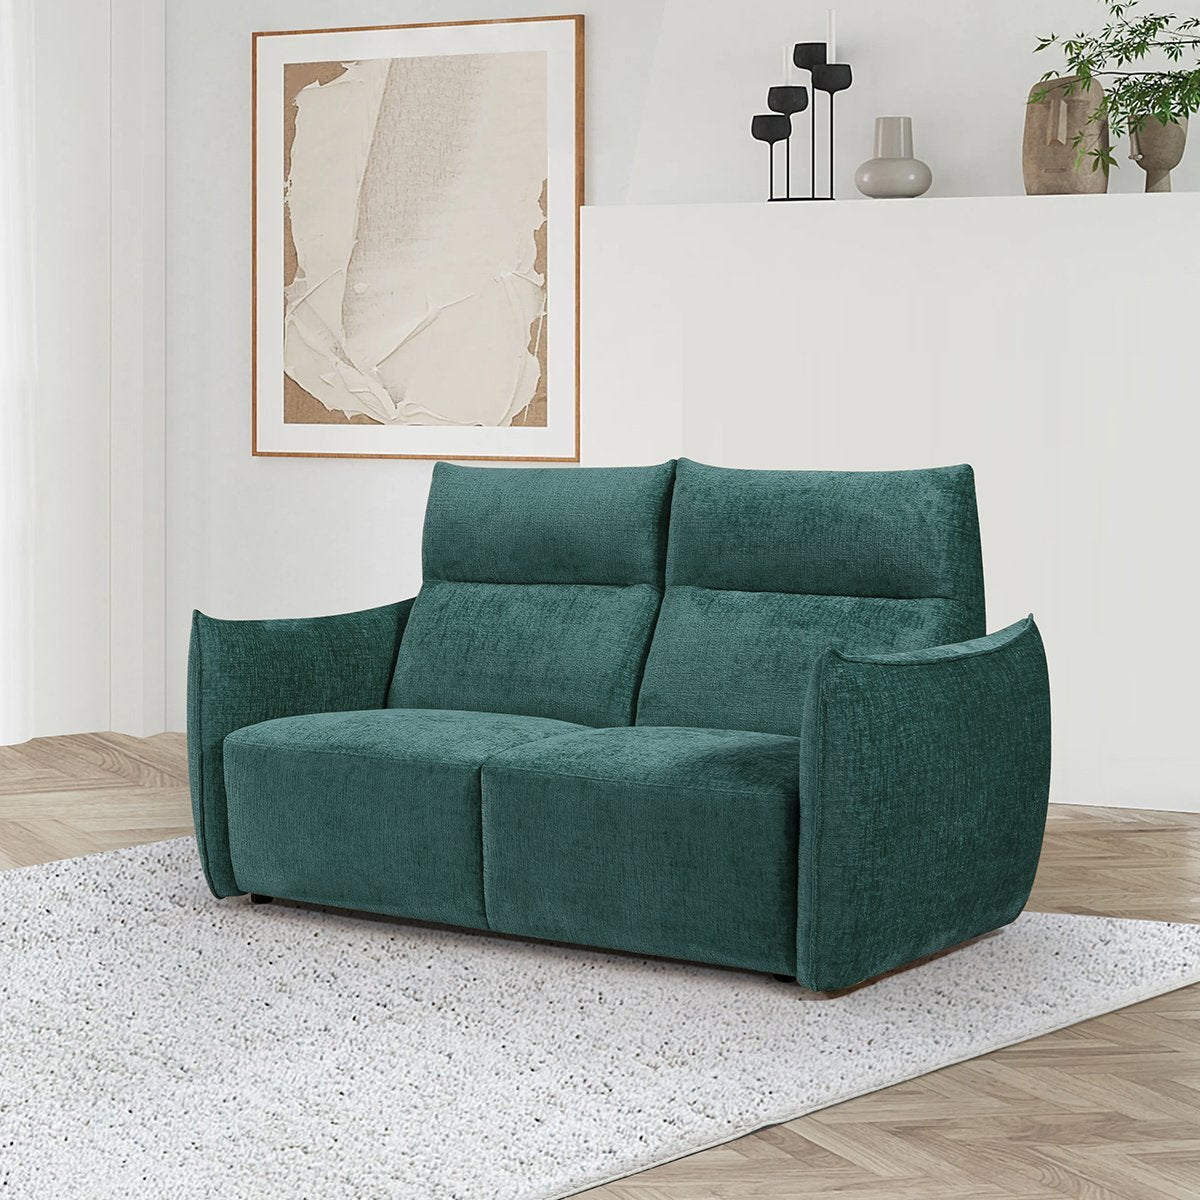 CozyCloud 3+2-Seater Lounge Sofa - Grab Some Furniture